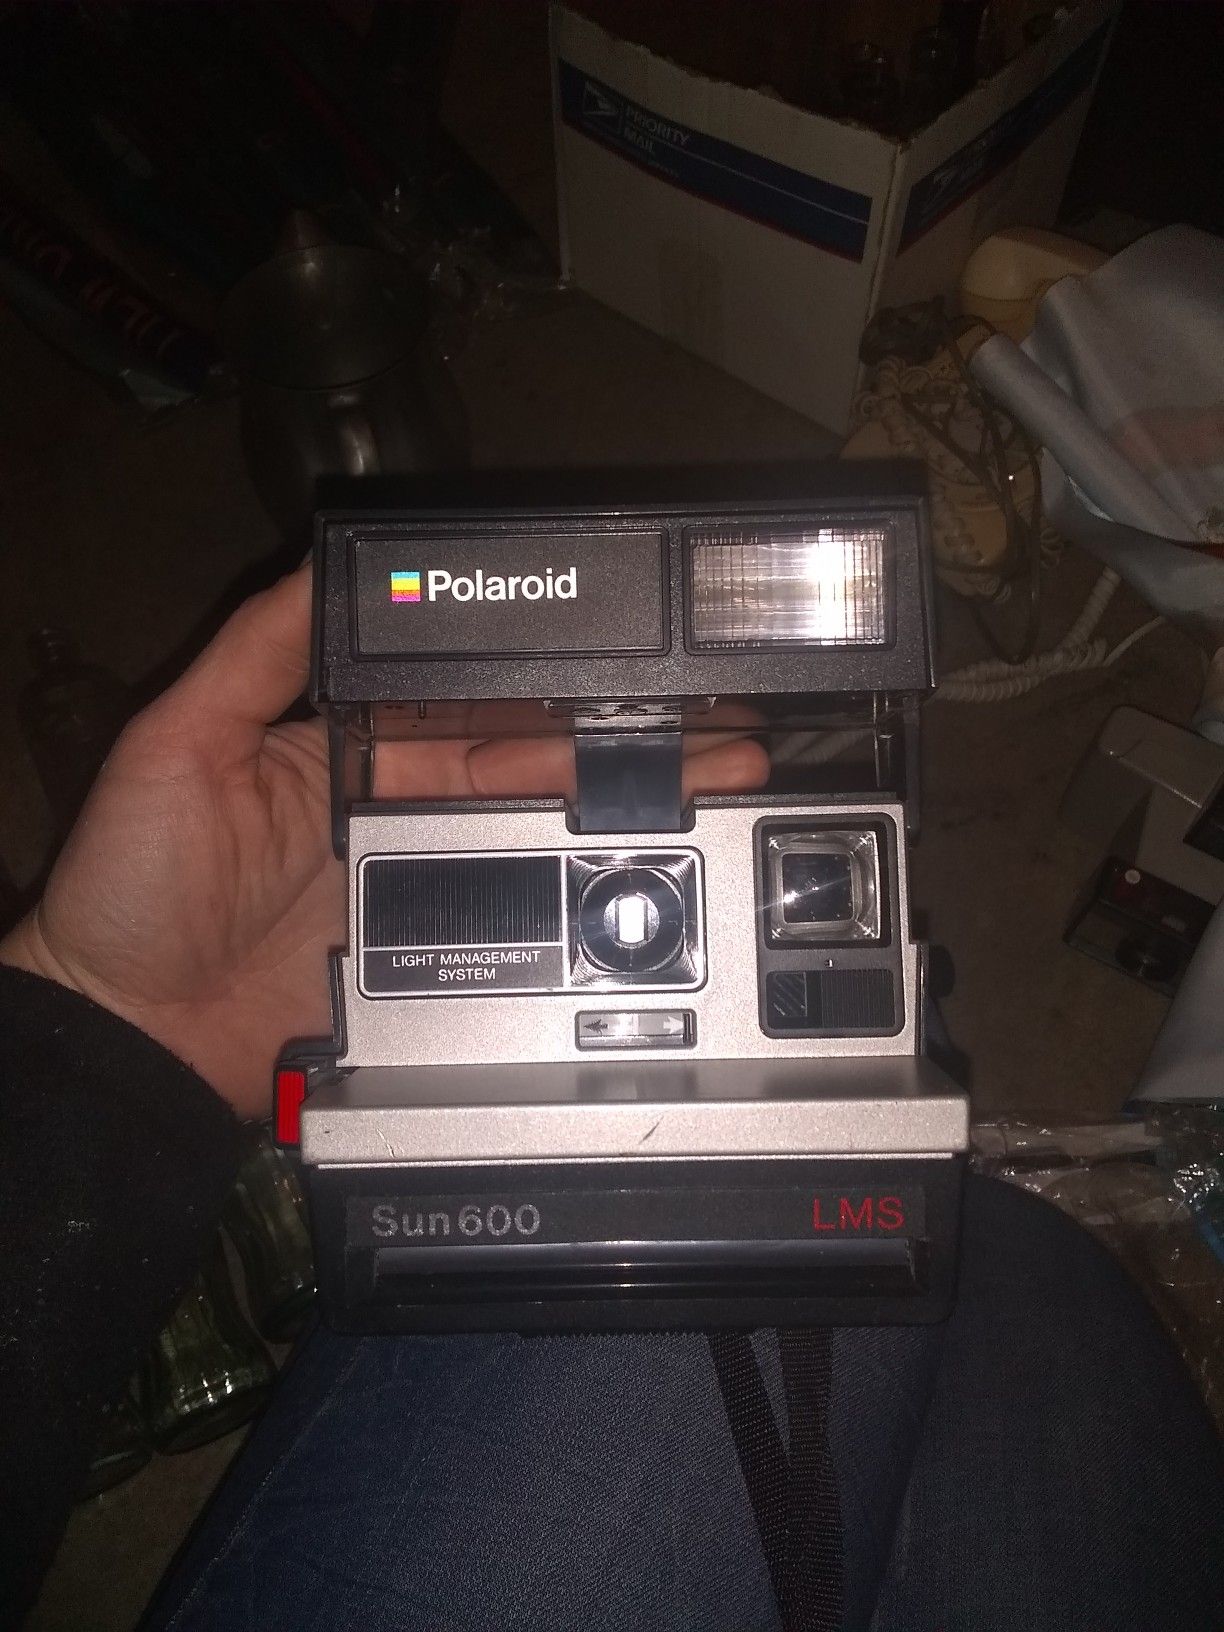 Pick up today!$30 obo vintage Polaroid sun 600 camera